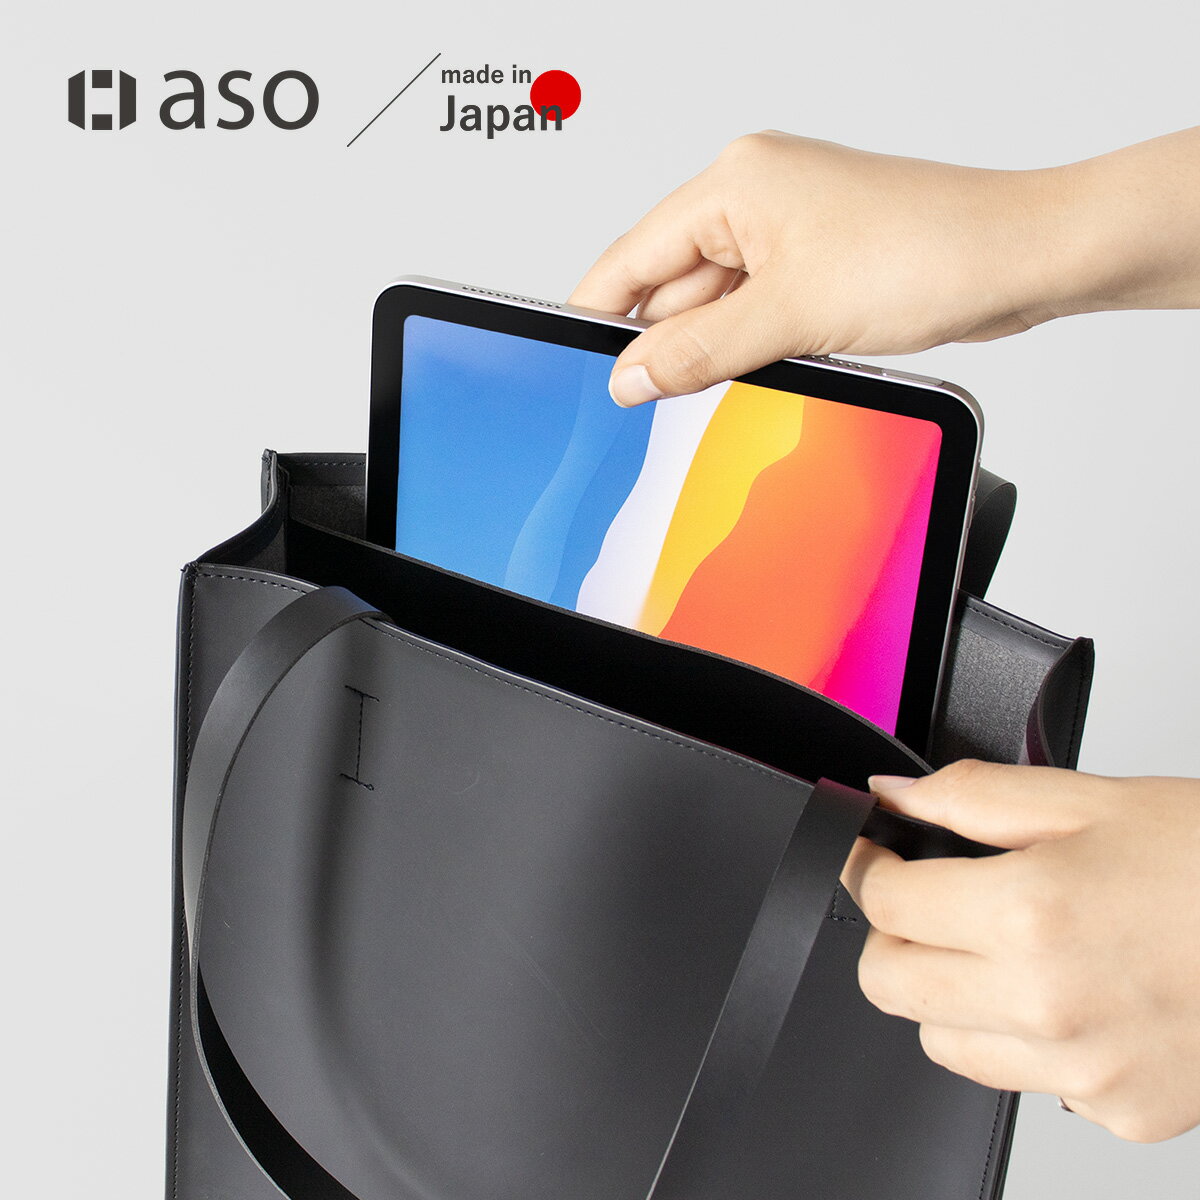 【aso】Layer tote レイヤートート iPad 持ち運び ショルダーバッグ トートバッグ ユニセックス 送料無料 新生活 ギフト プレゼント プチギフト